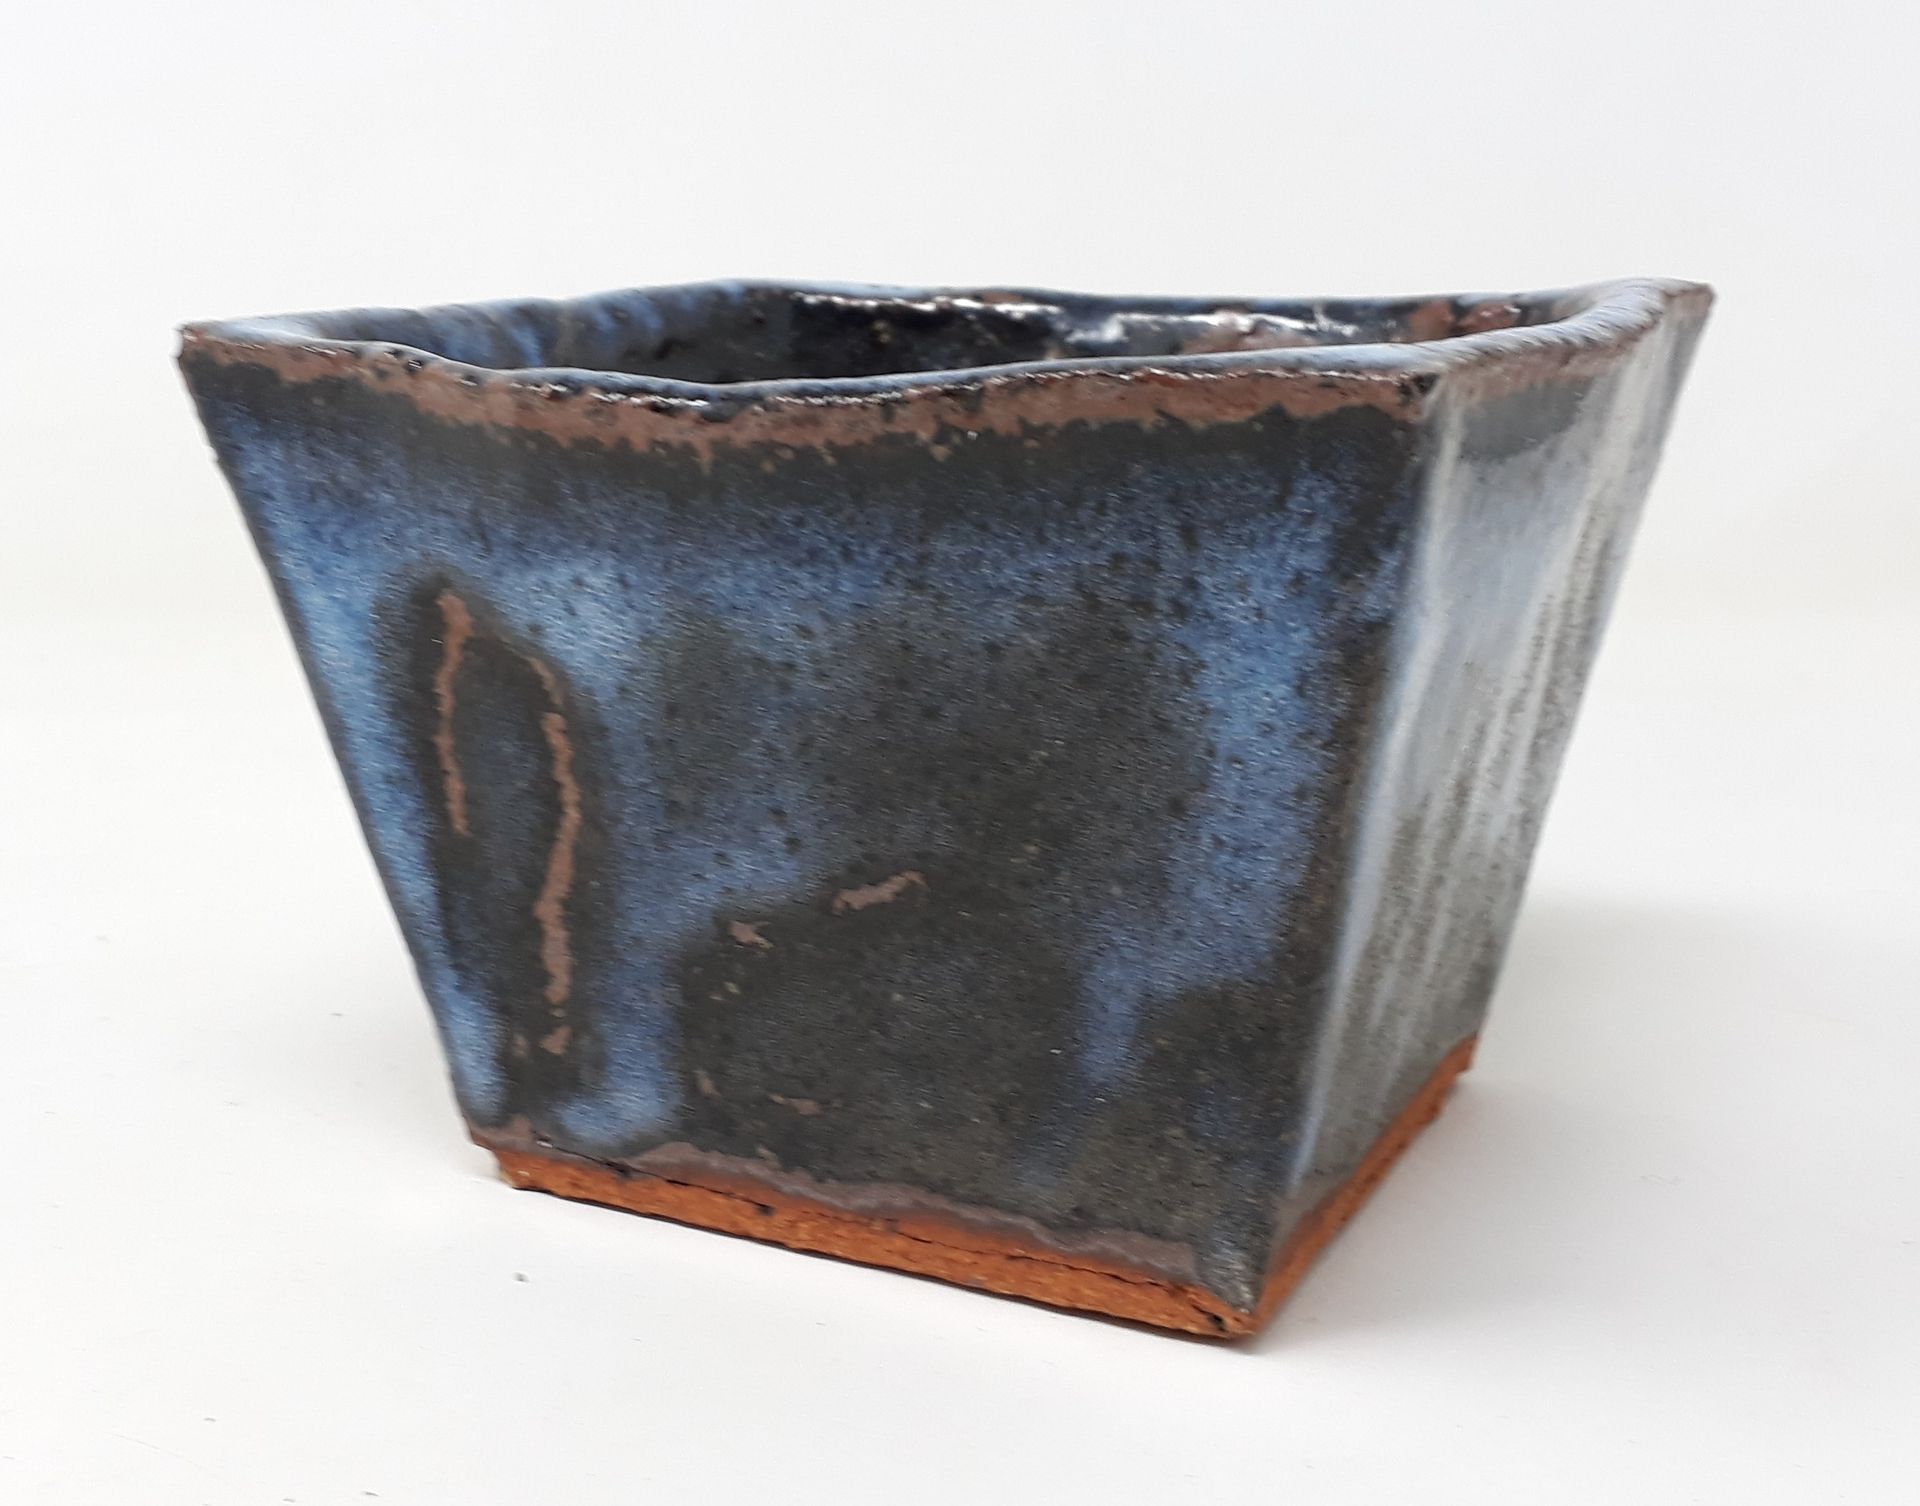 Null 埃里克-德普朗什

方形蓝釉陶罐，鞋跟下有字母图案和n°98

9 x 12.5 x 12.5厘米